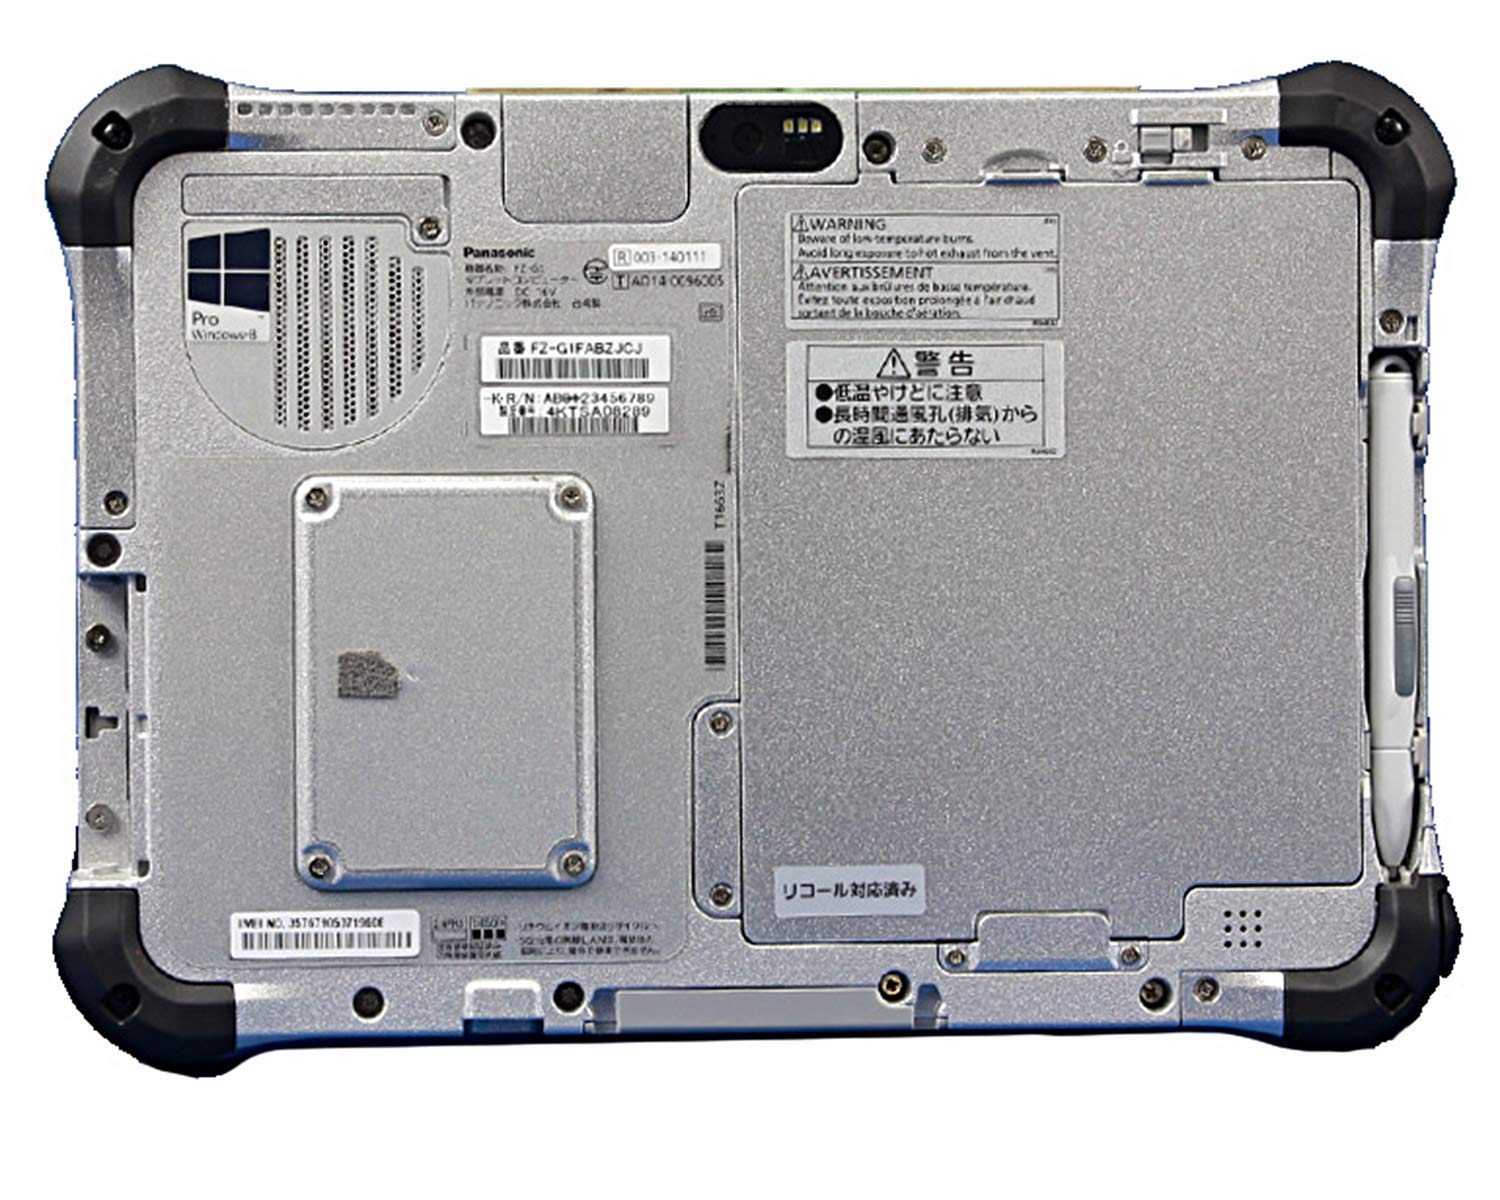 Panasonic Toughpad FZ-G1, Intel Core i5-4310U 2.0GHz, 8GB, 256GB SSD, 10.1 WUXGA Multi Touch Digitizer, WiFi, Bluetooth, Webcam, Rear Cam, Windows 10 Pro, 4G LTE, 2nd USB (Renewed)